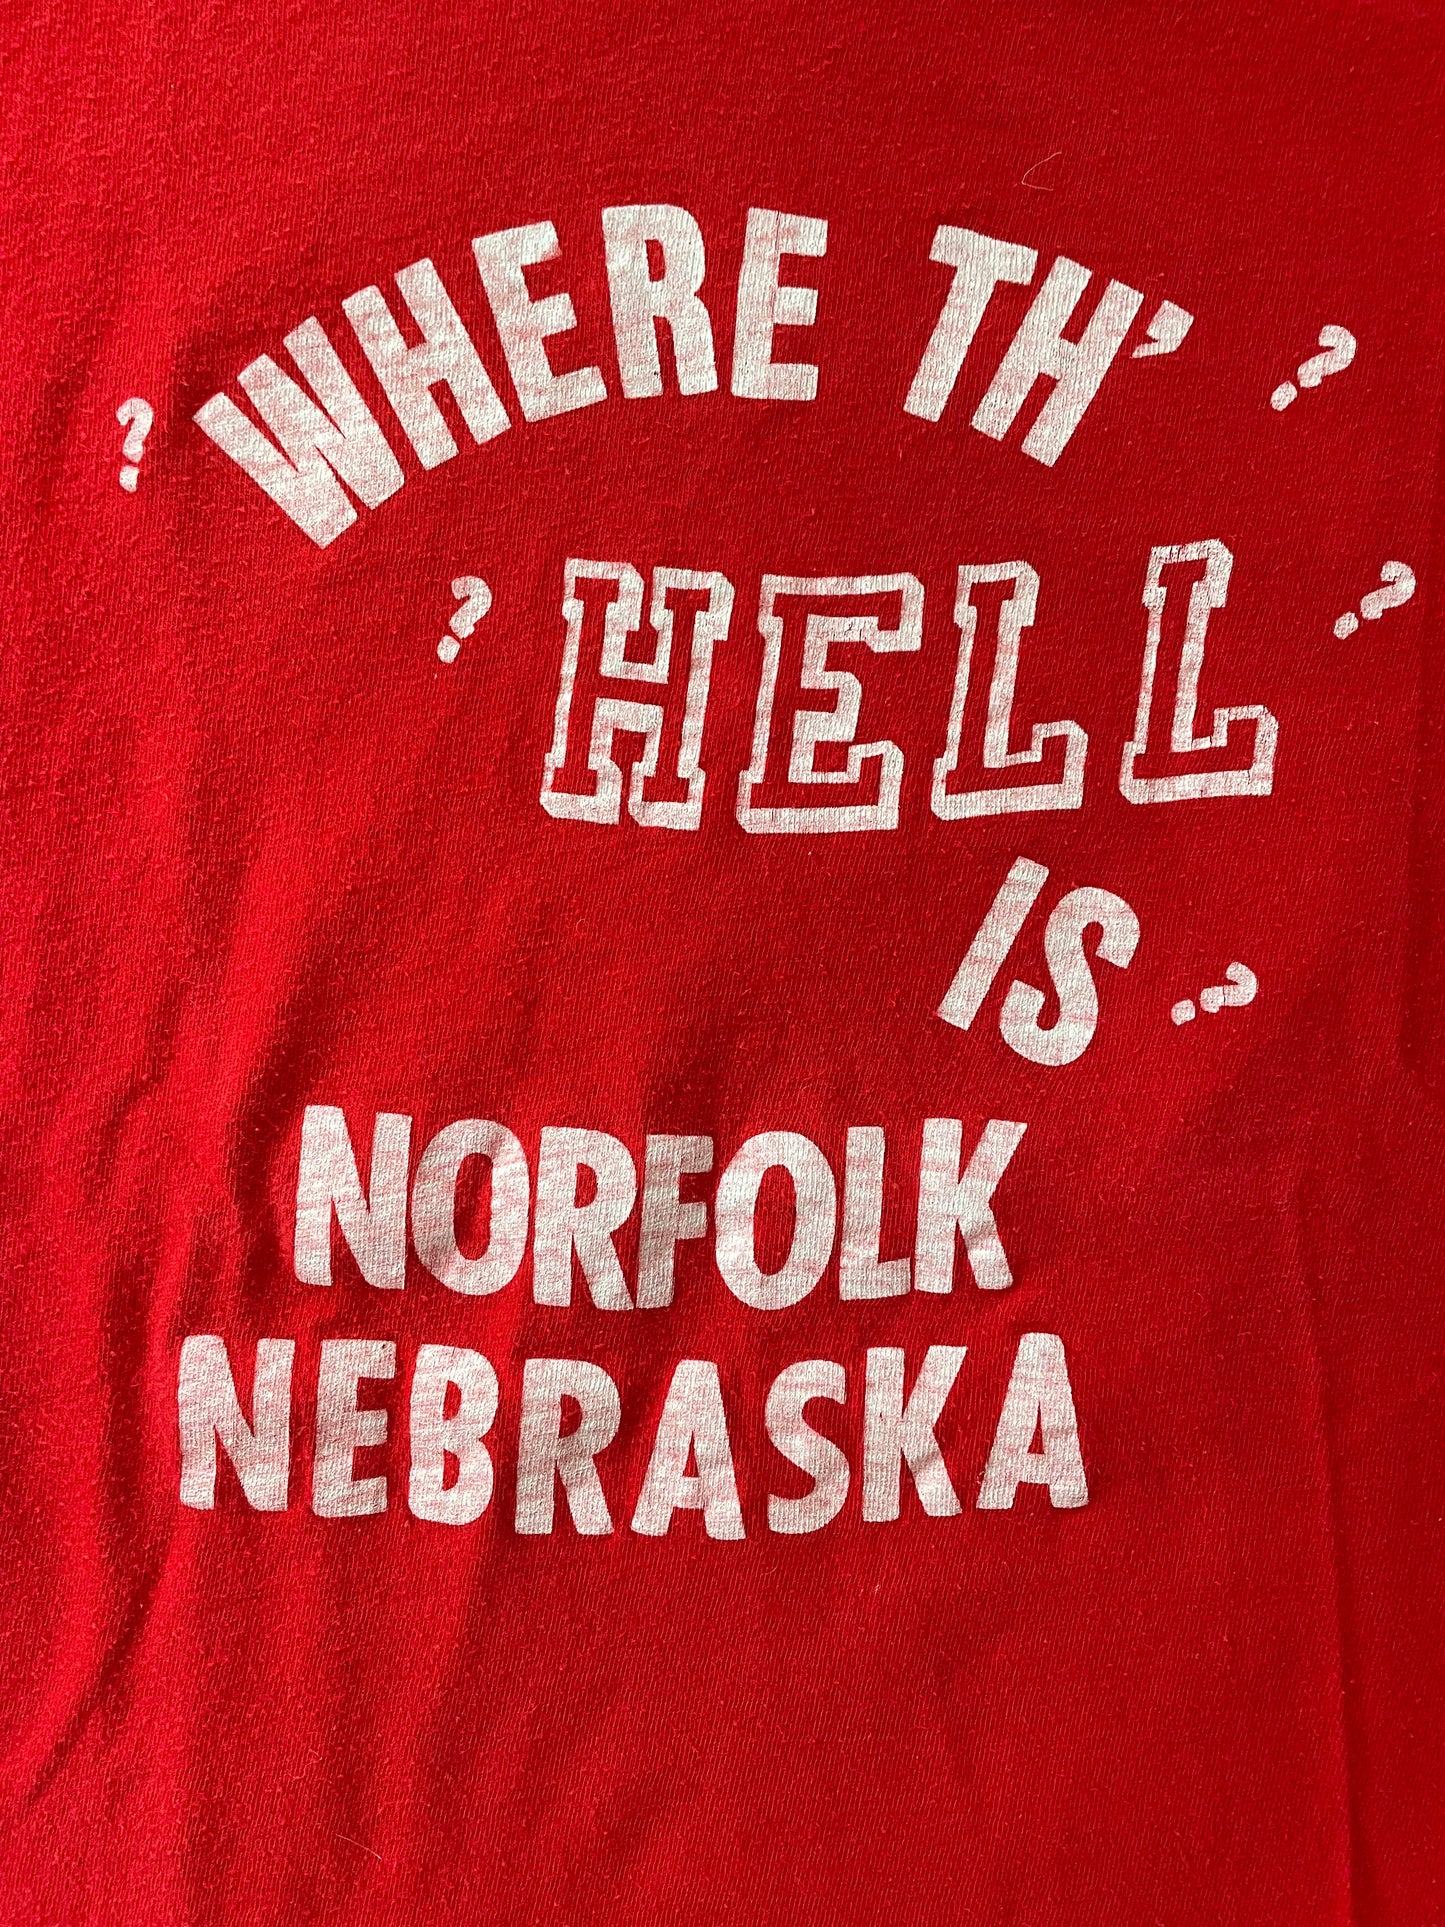 70s Where Th’ Hell Is Norfolk Nebraska Tee